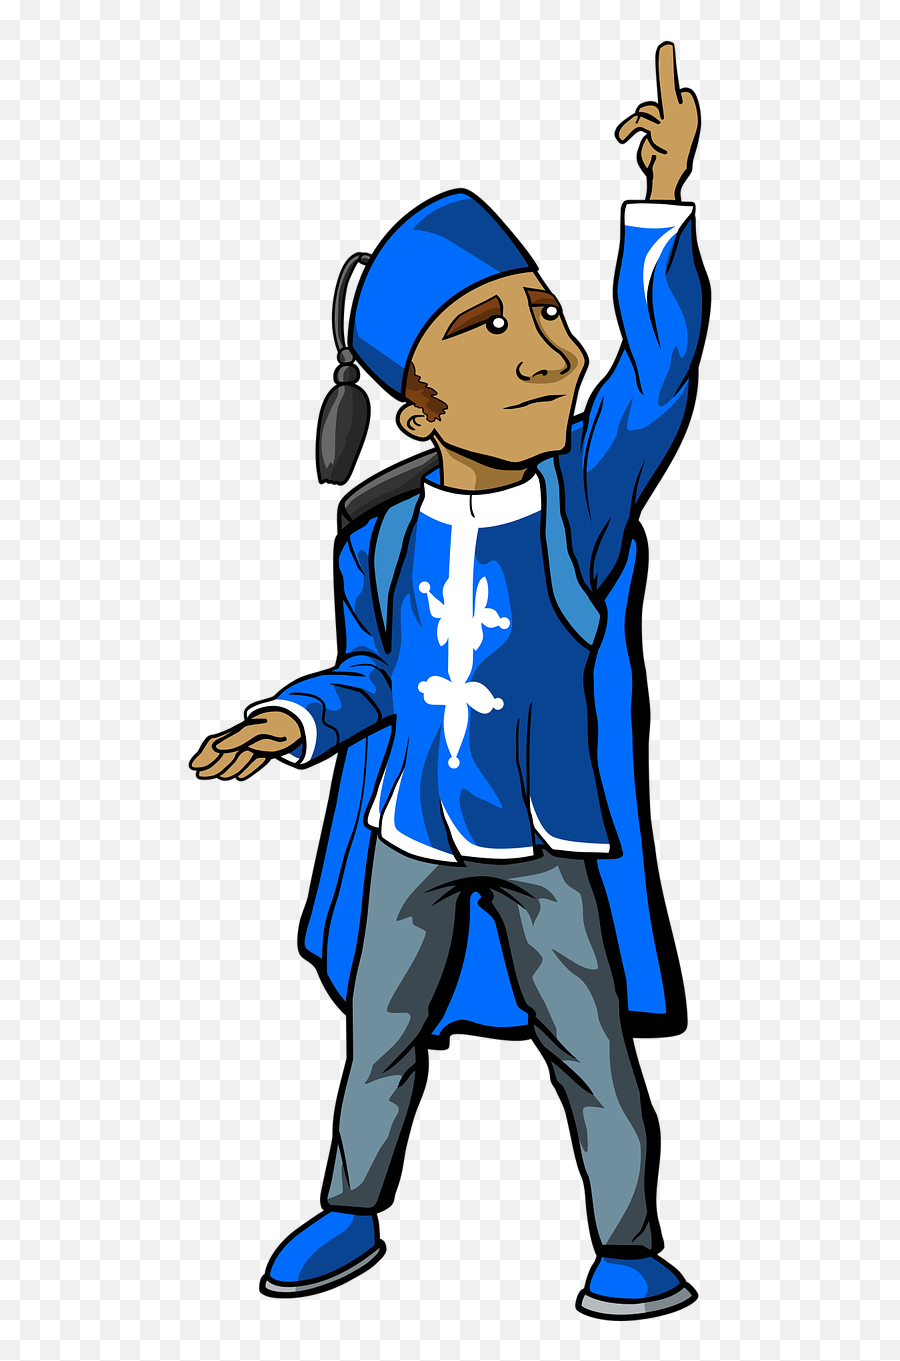 Sheikh Prince Figure - Free Vector Graphic On Pixabay Emoji,Crooks And Castle Logo